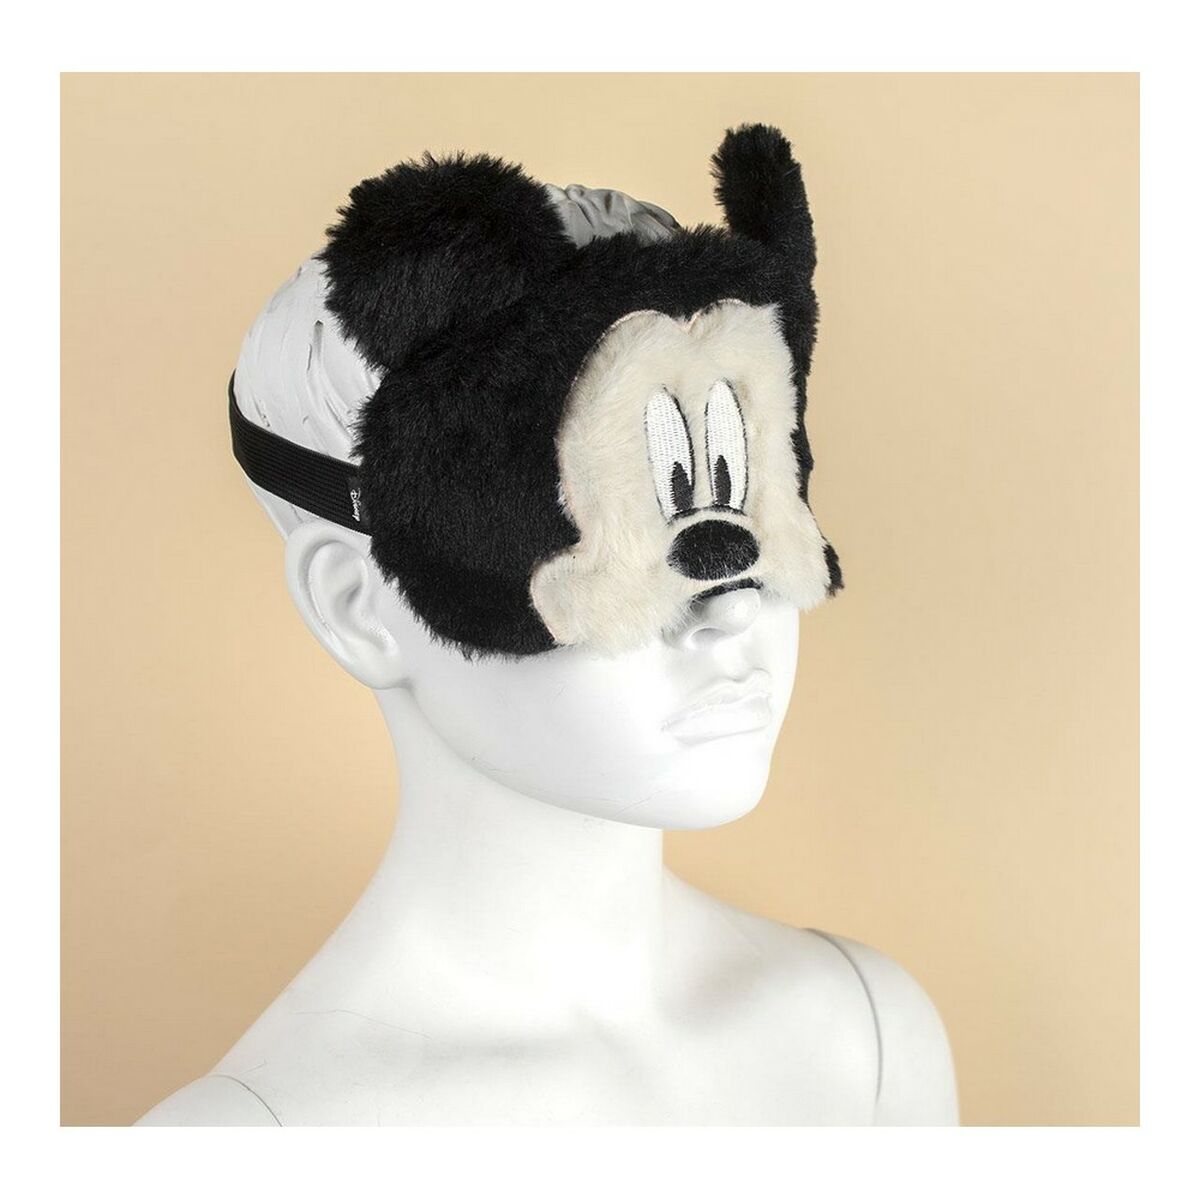 Blinddoek Mickey Mouse